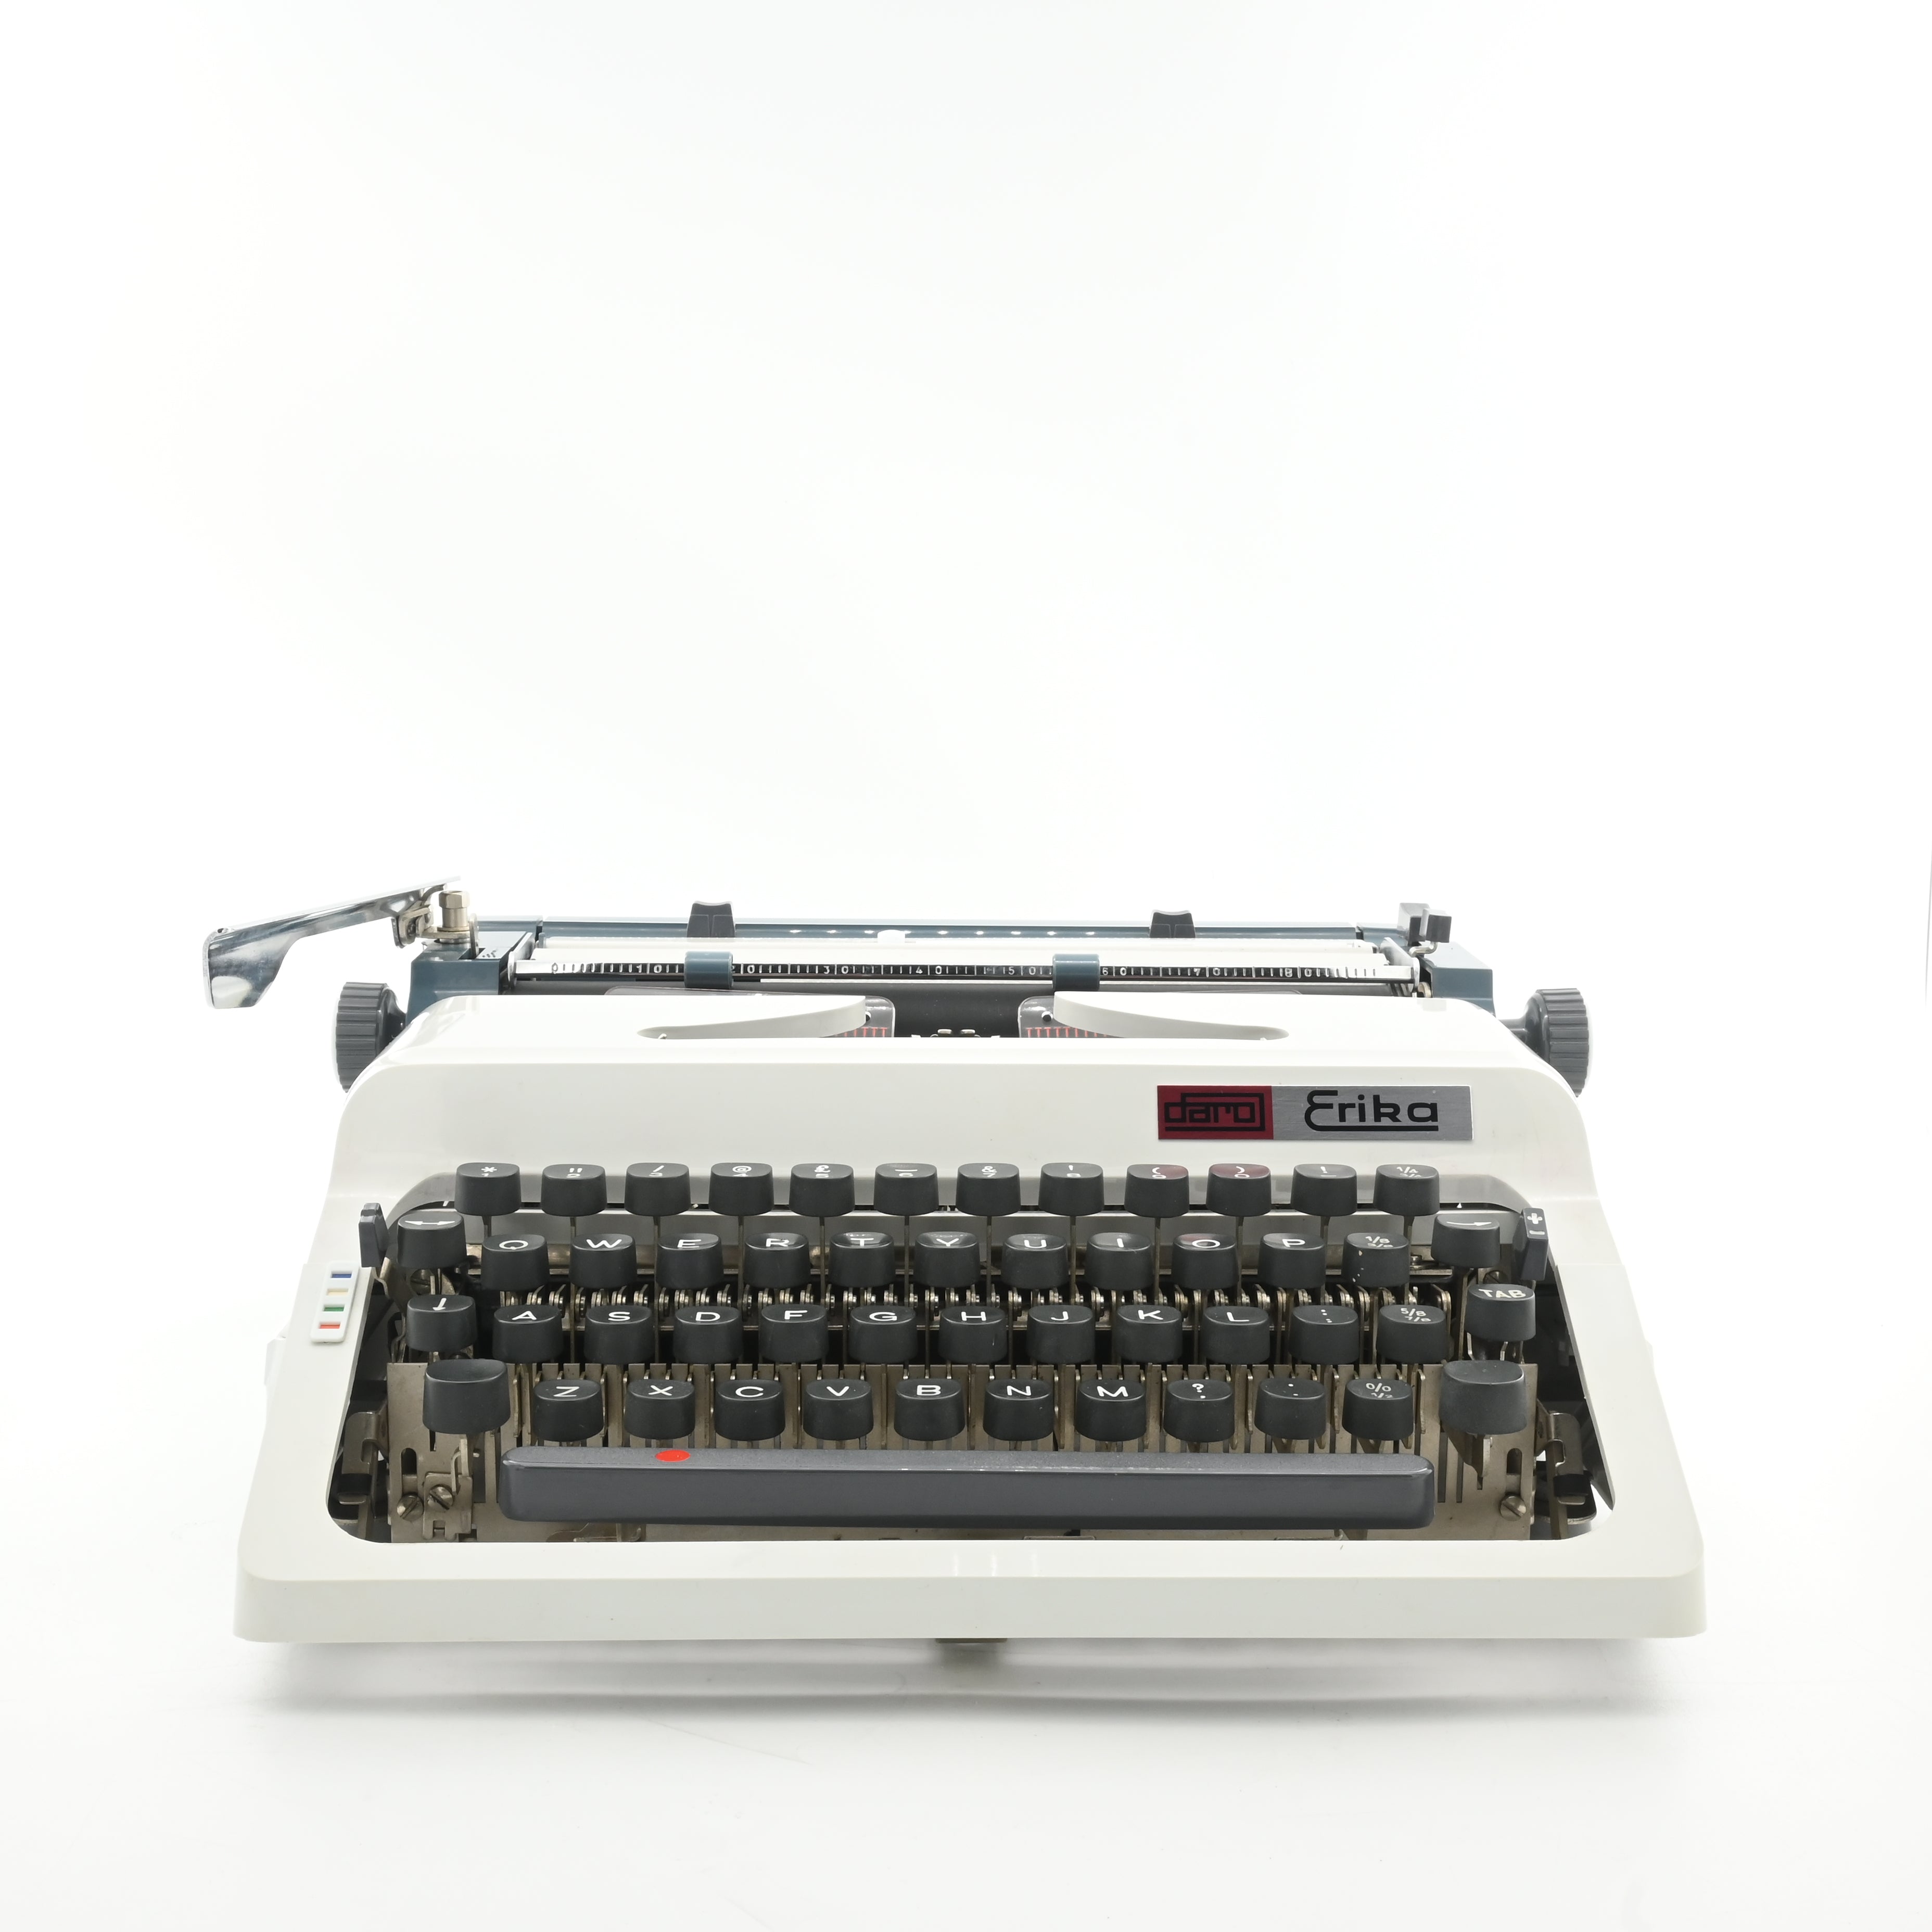 What Is My Typewriter Worth? - Typewriters 101